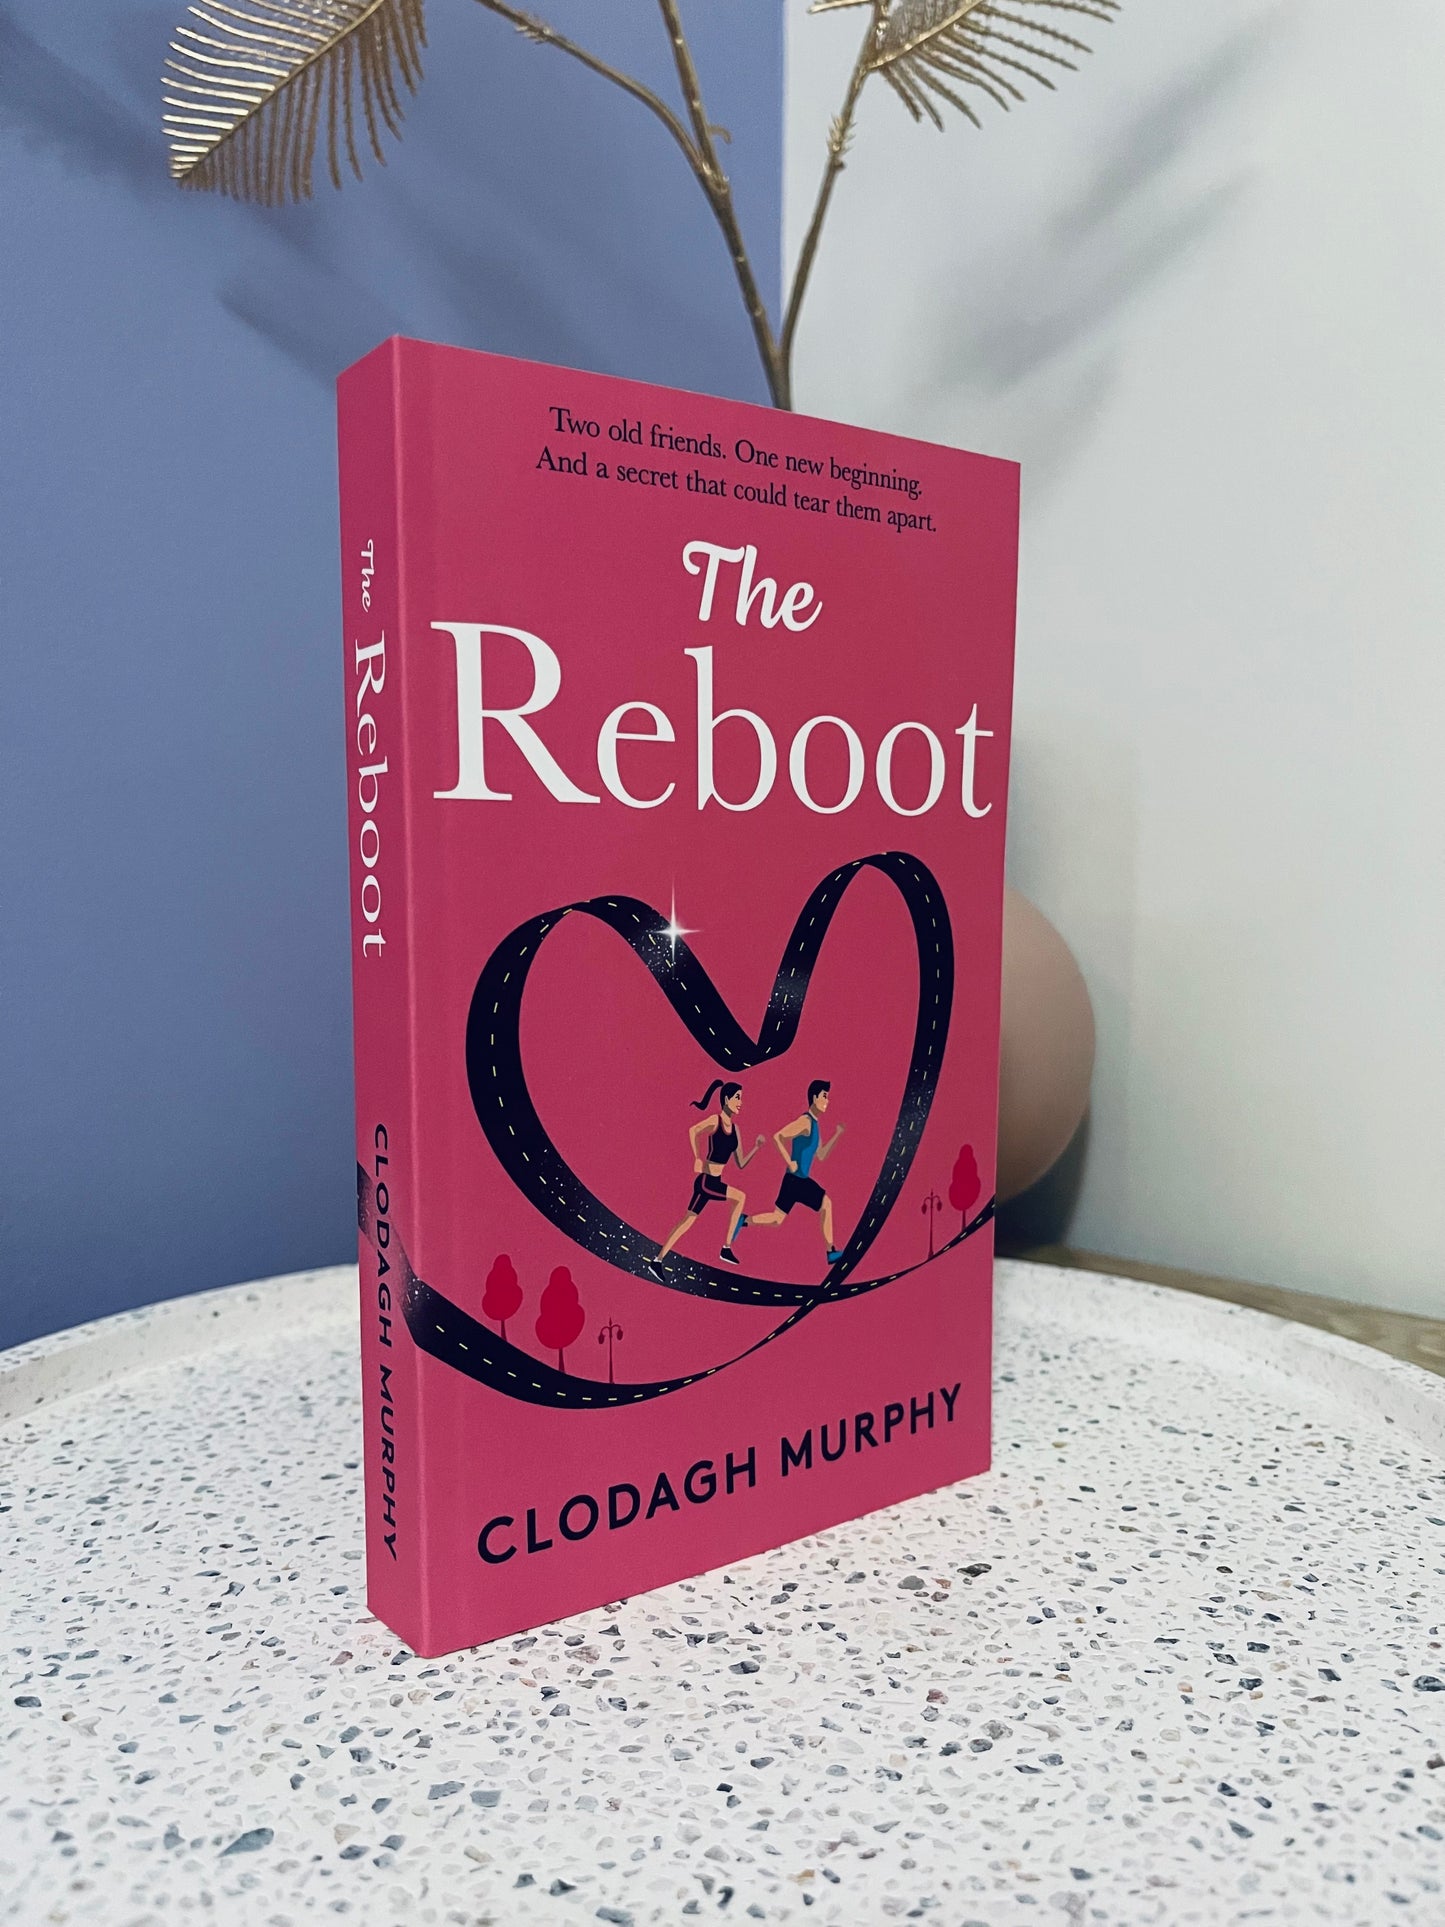 The Reboot by Clodagh Murphy